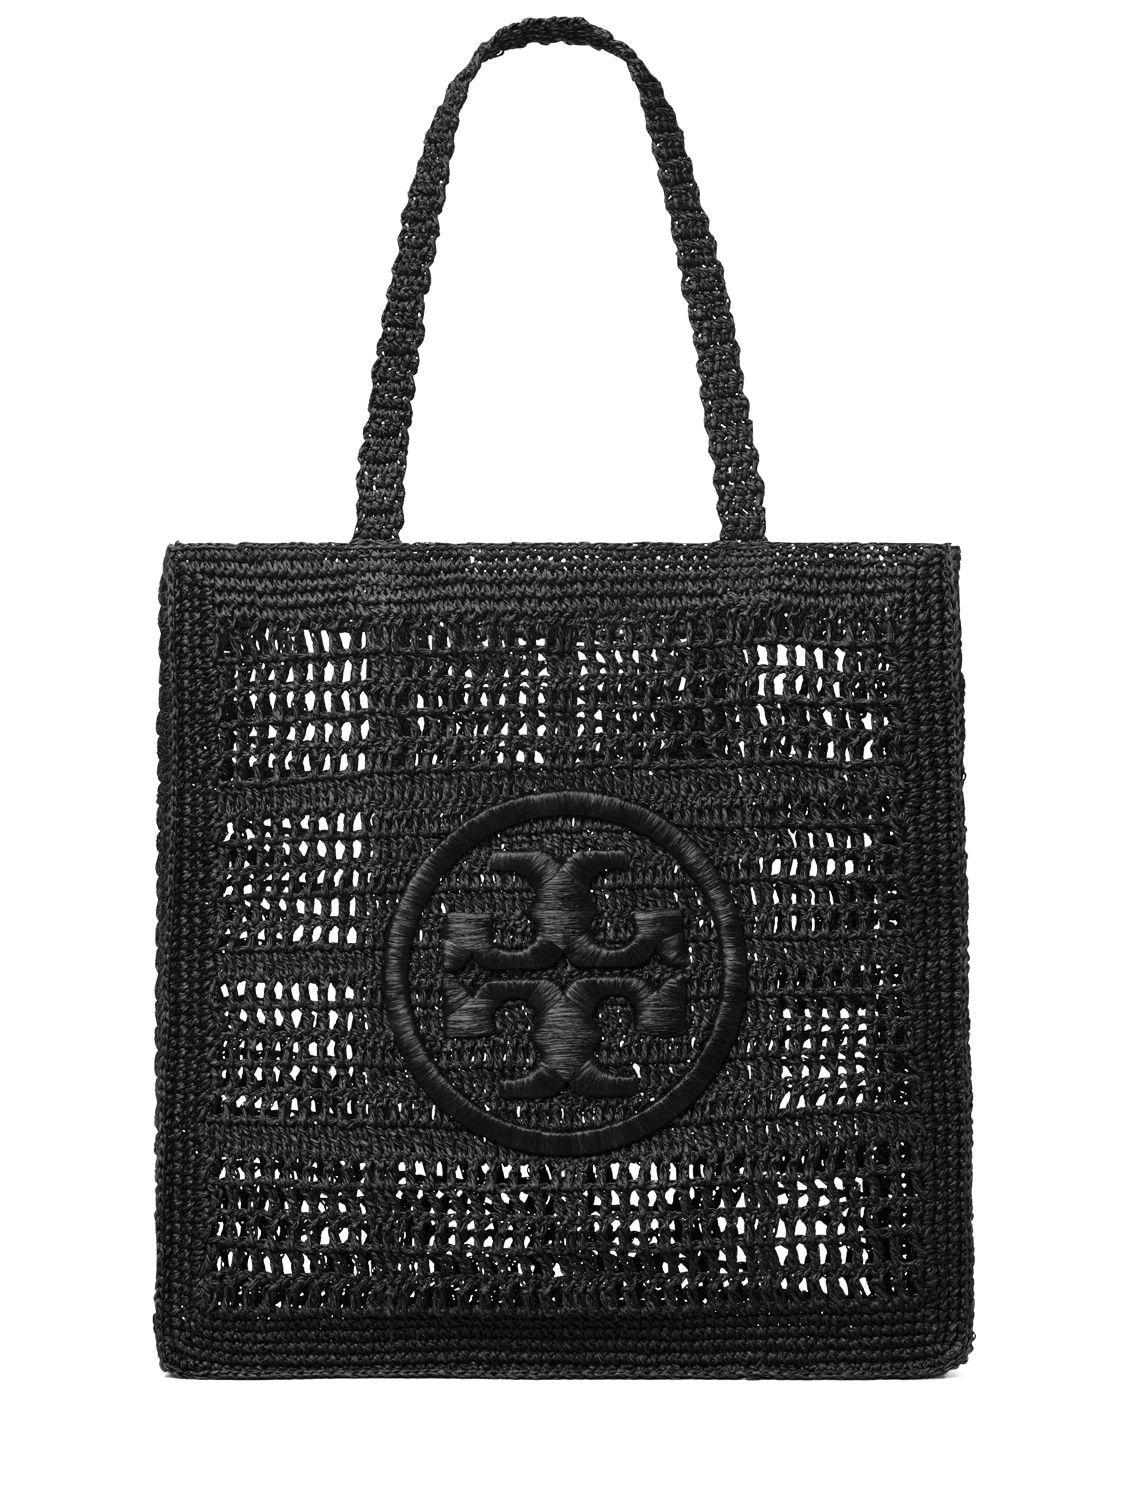 Tory Burch Ella Hand-crocheted Tote Bag in Black | Lyst